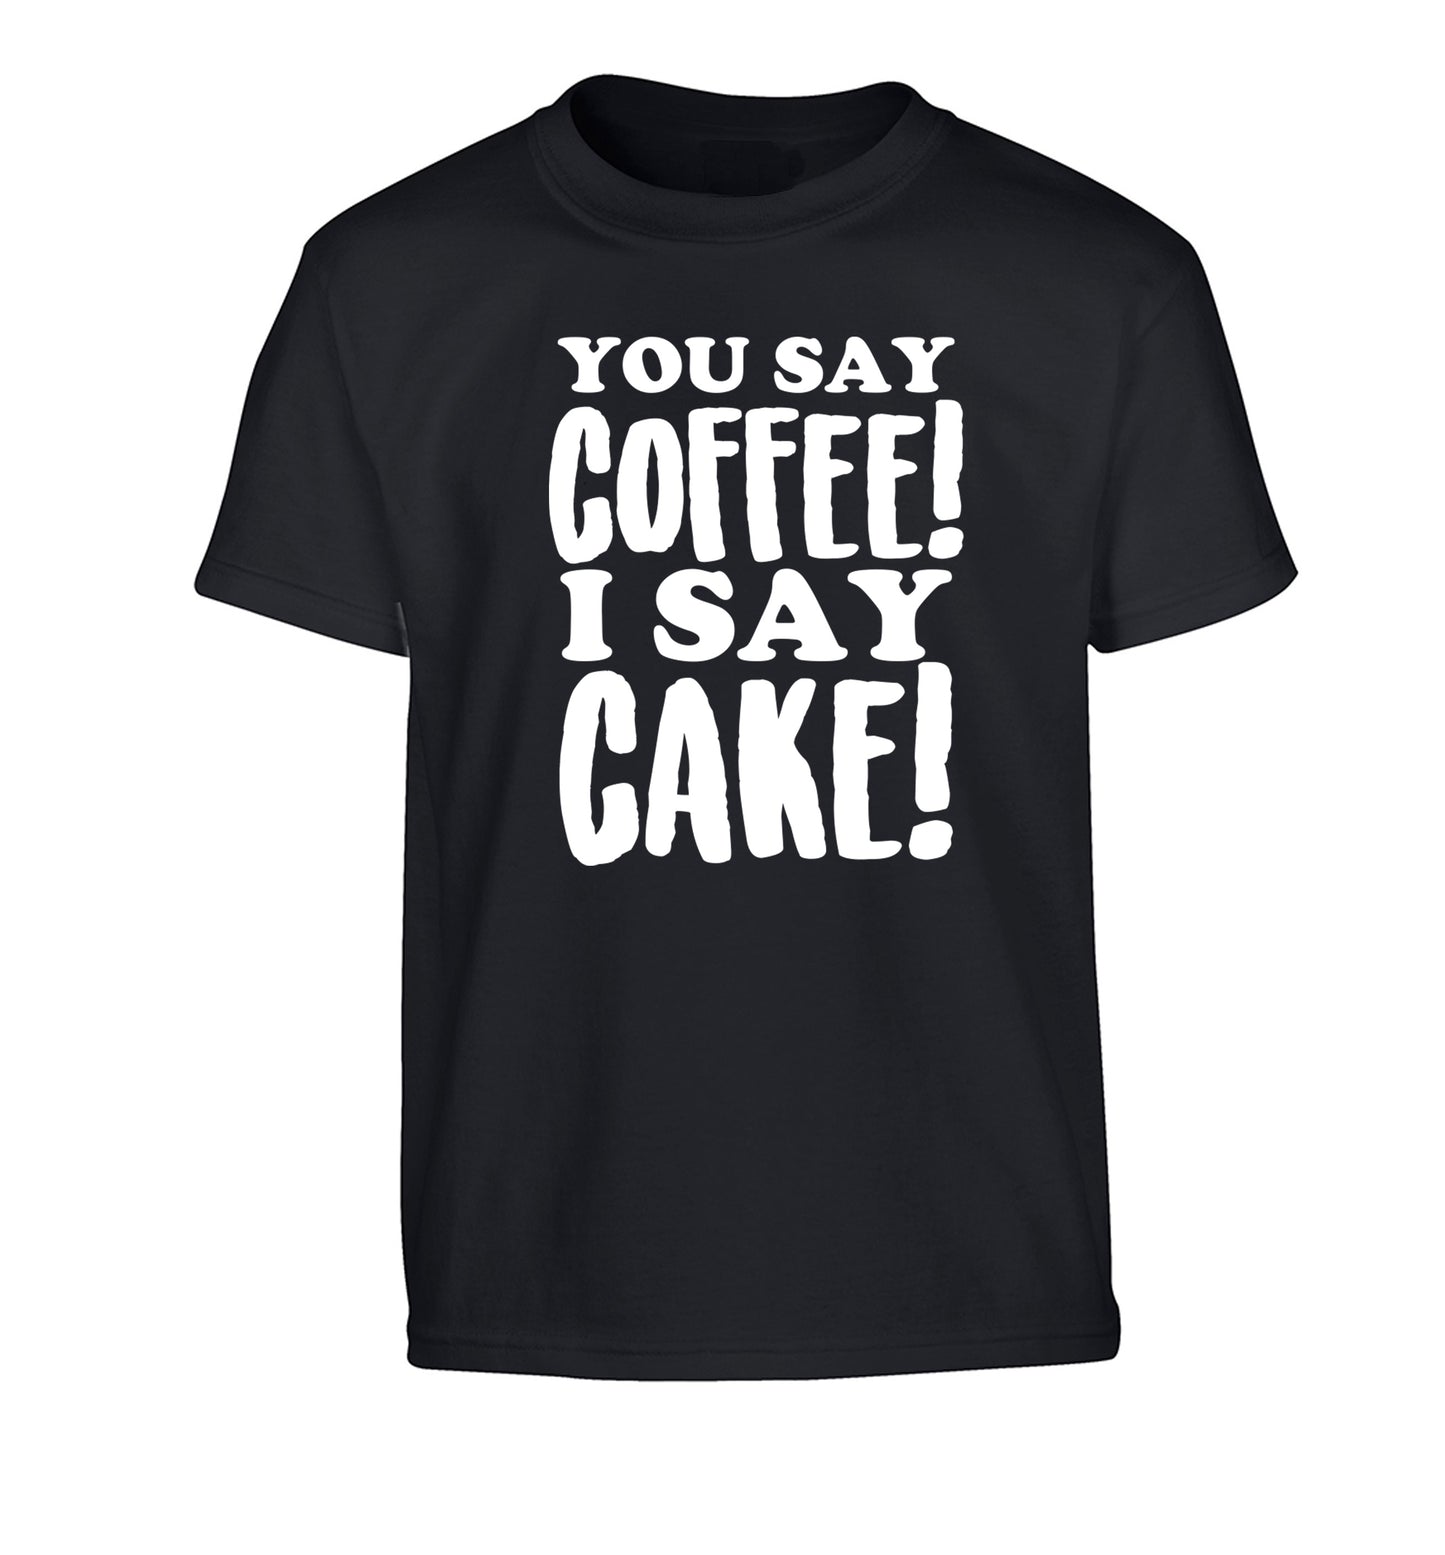 You say coffee I say cake! Children's black Tshirt 12-14 Years